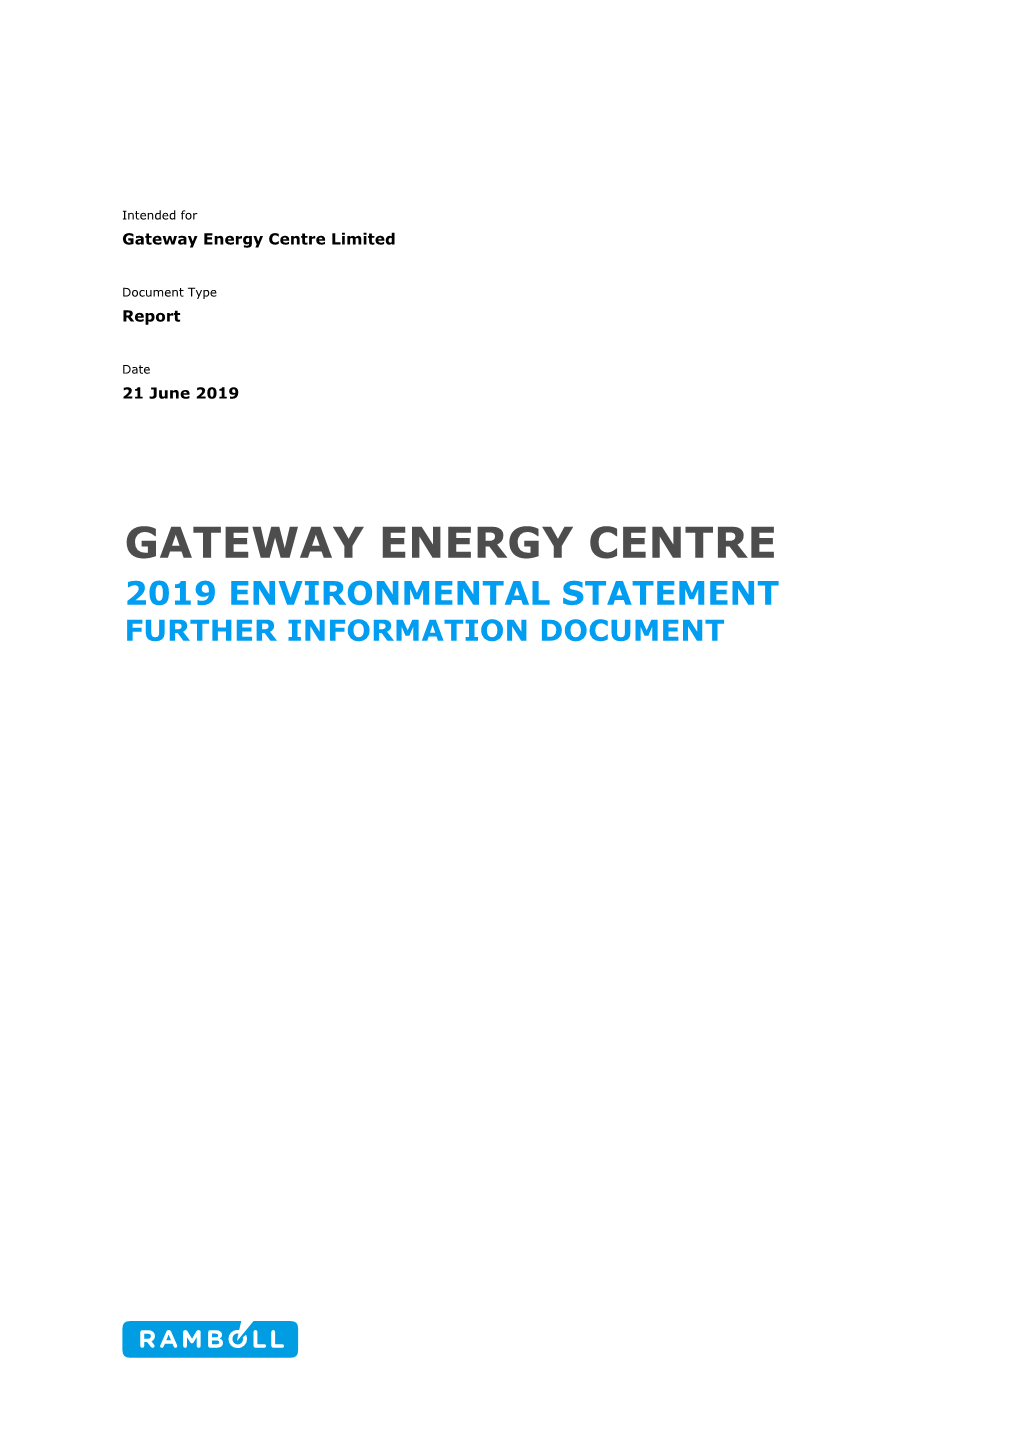 Gateway Energy Centre Limited